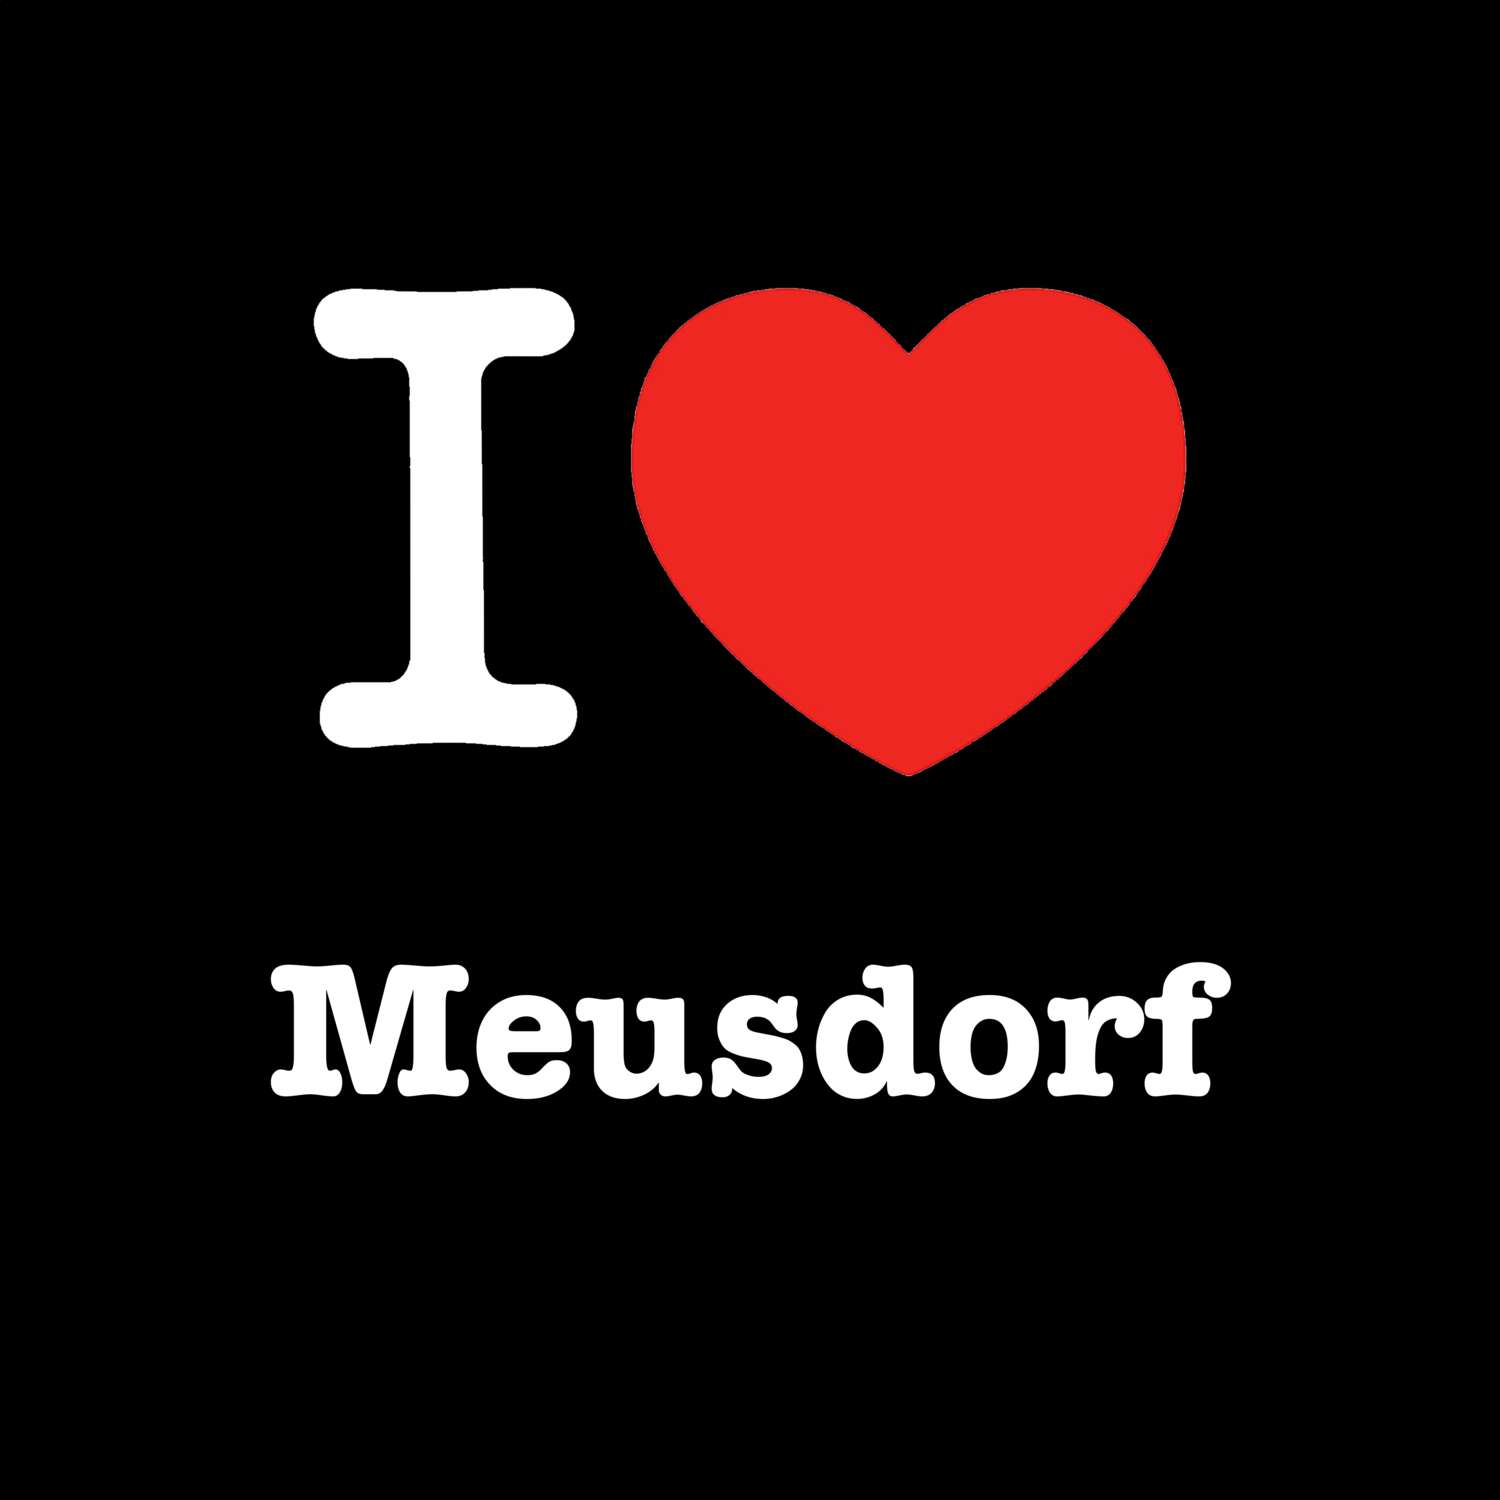 Meusdorf T-Shirt »I love«